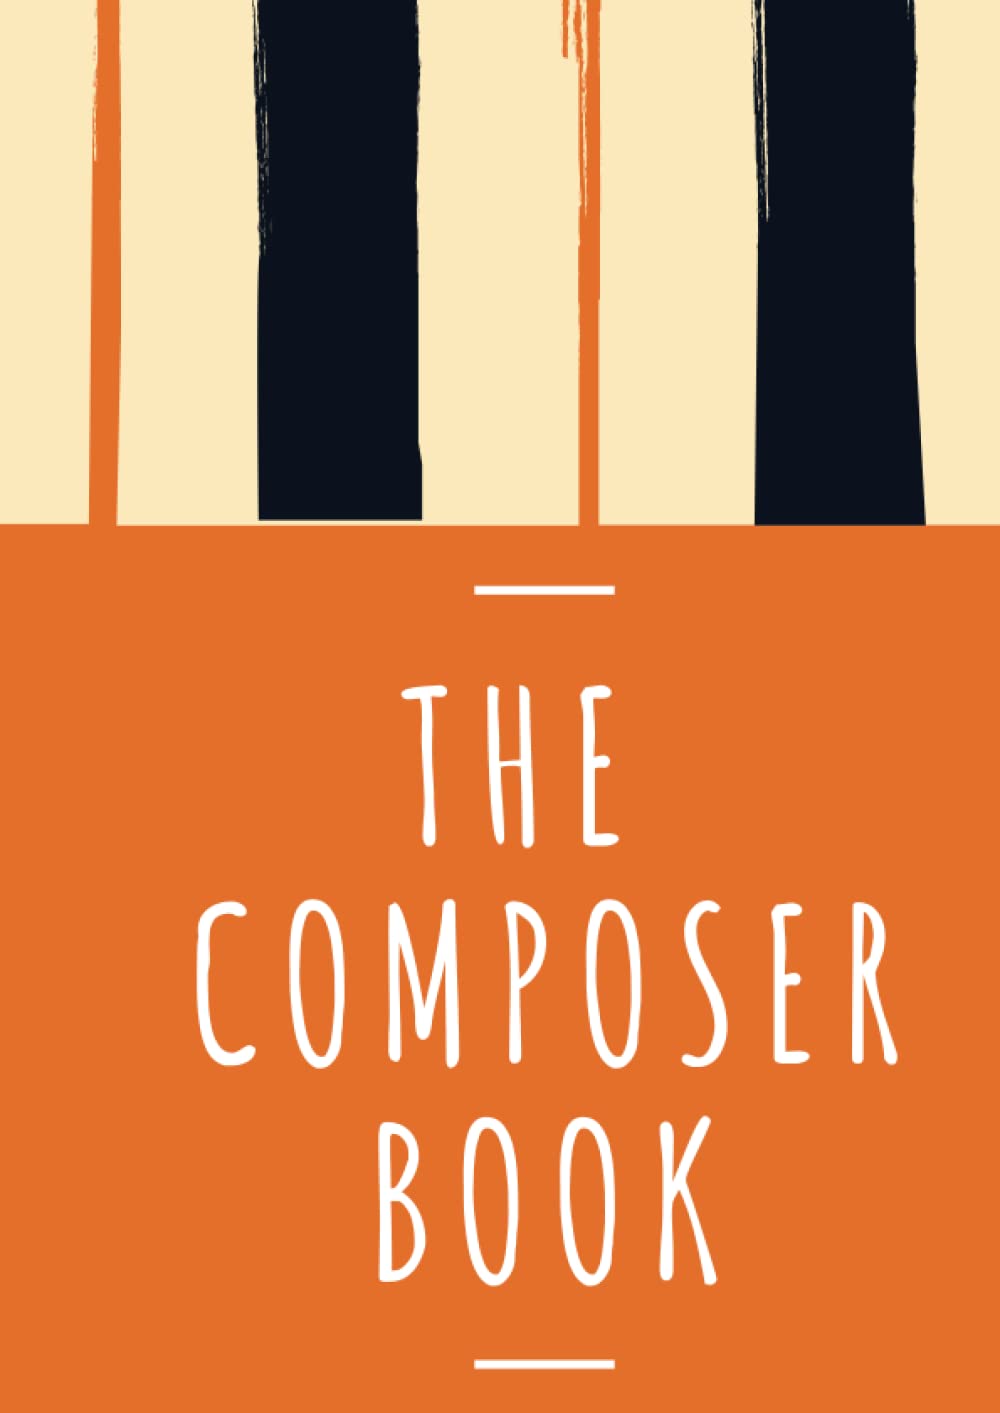 The composer book